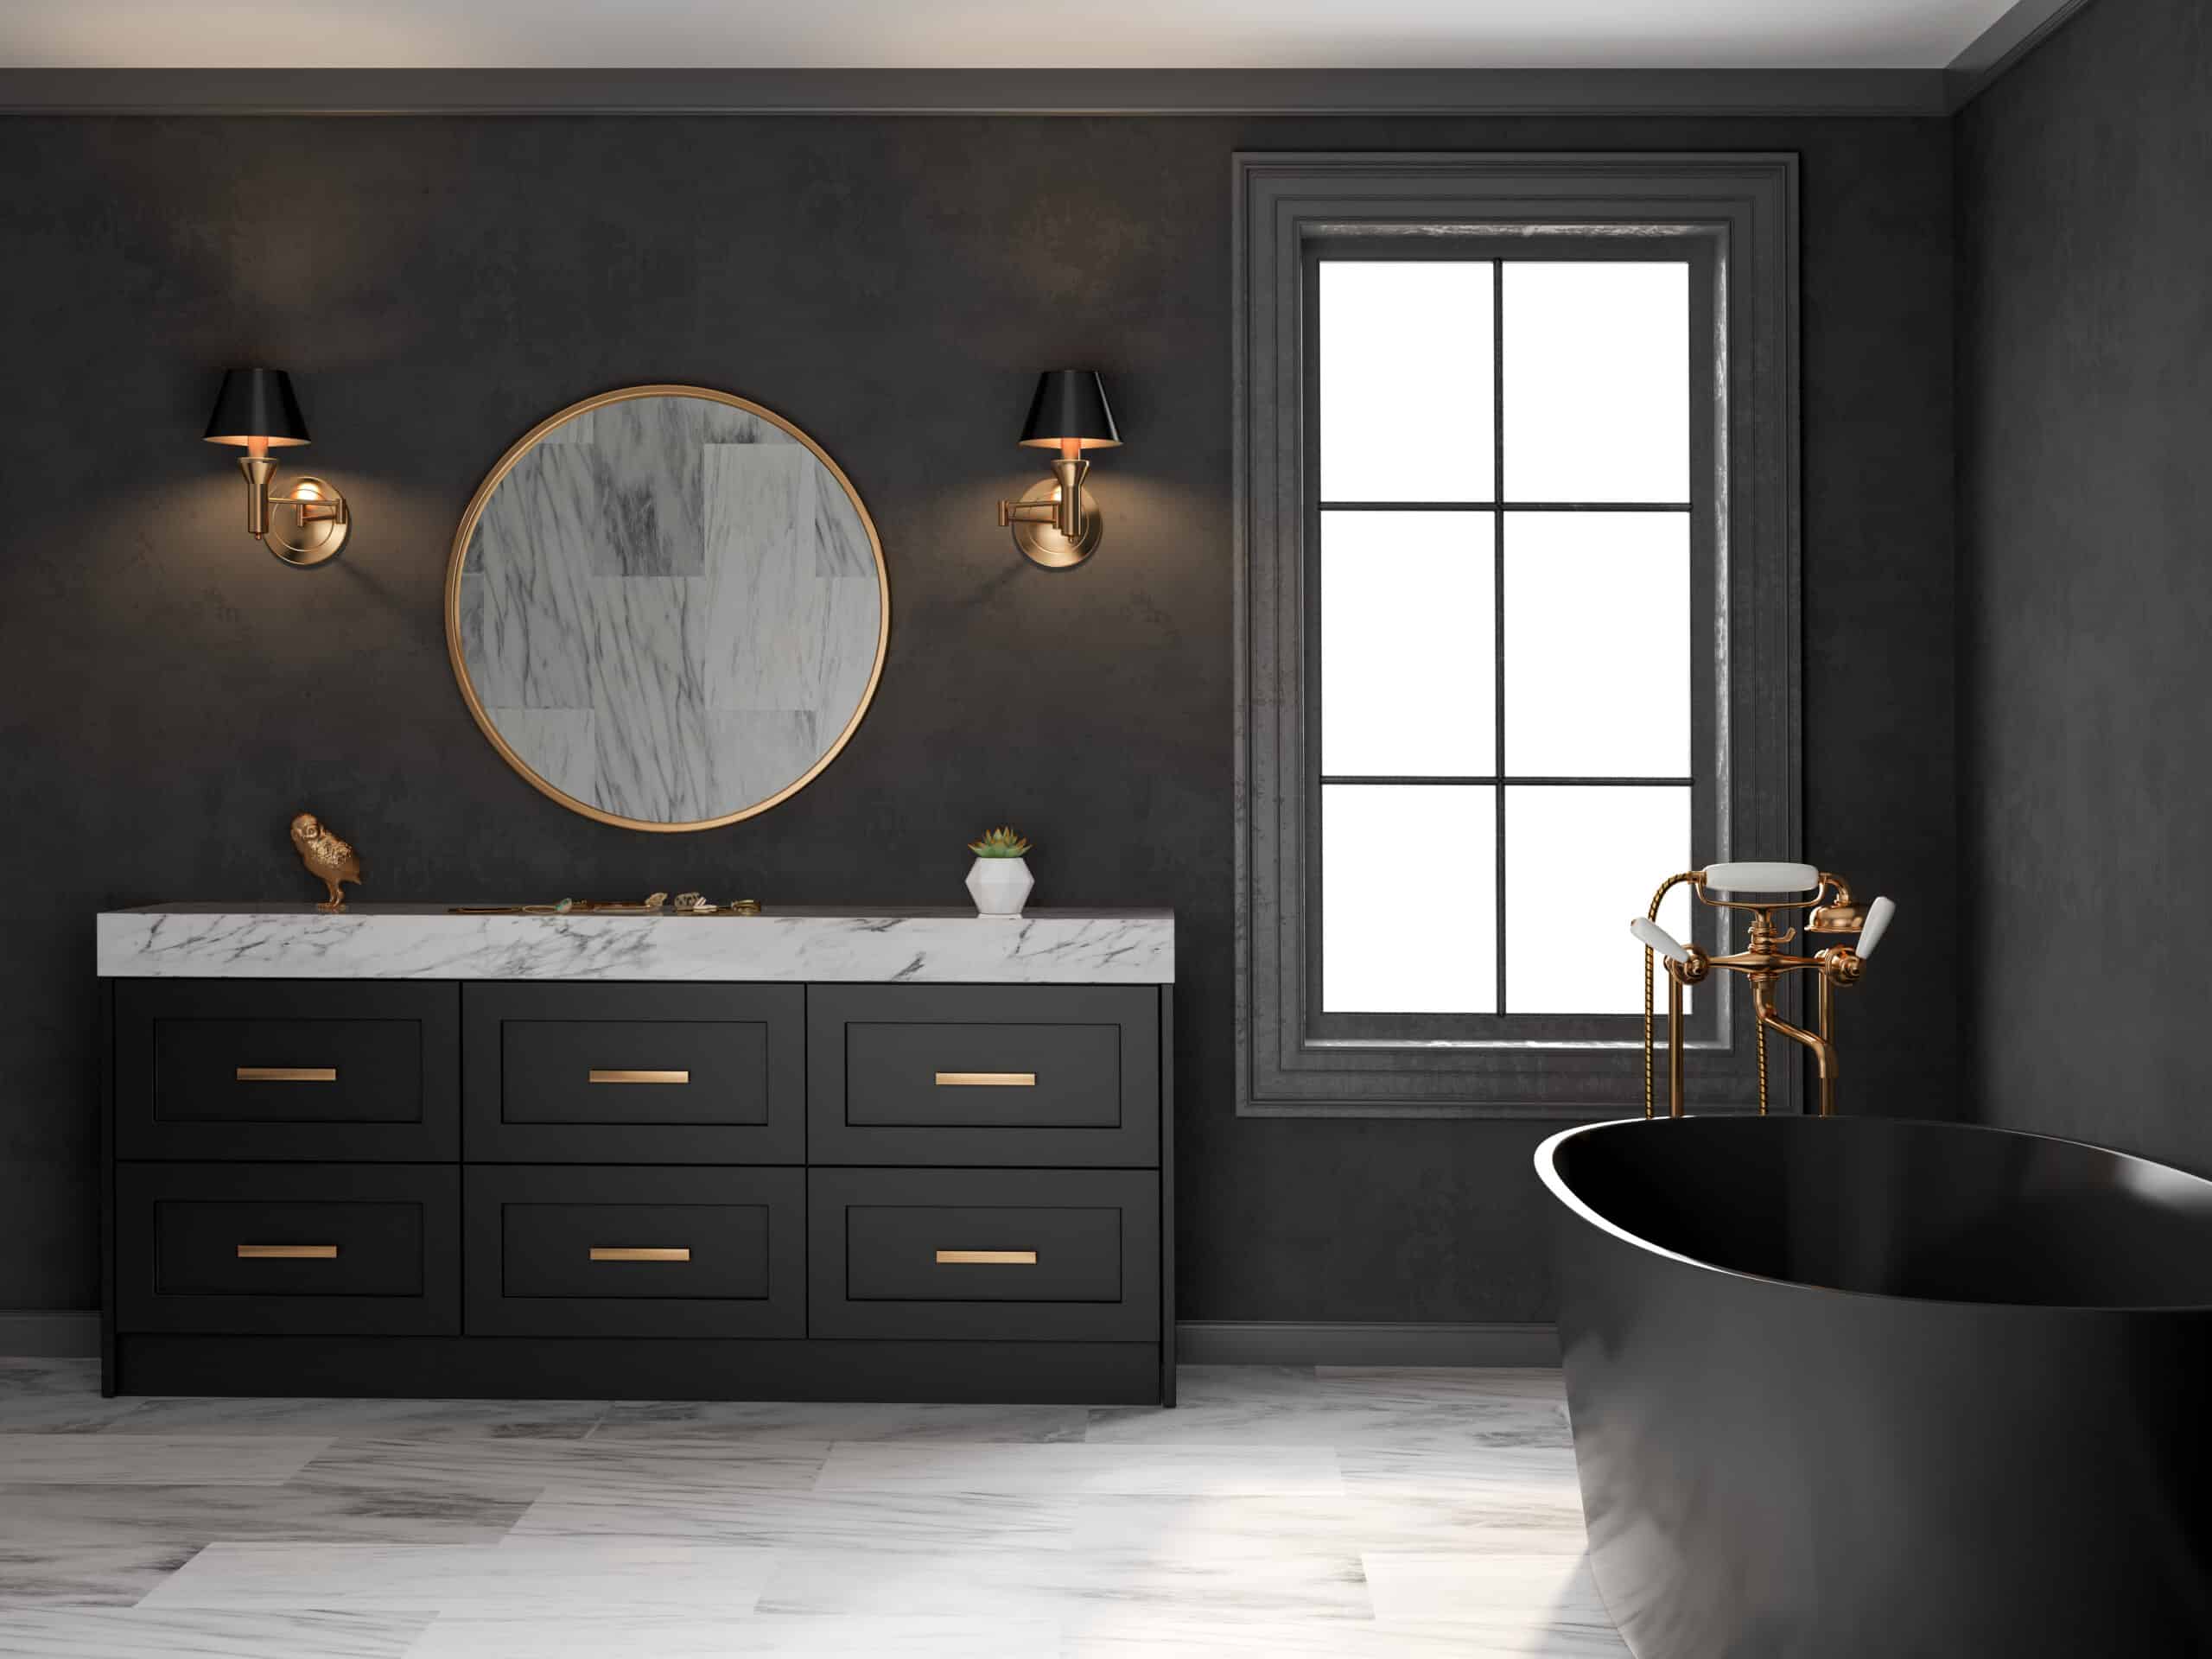 Interior black bathroom classic style 3 D rendering